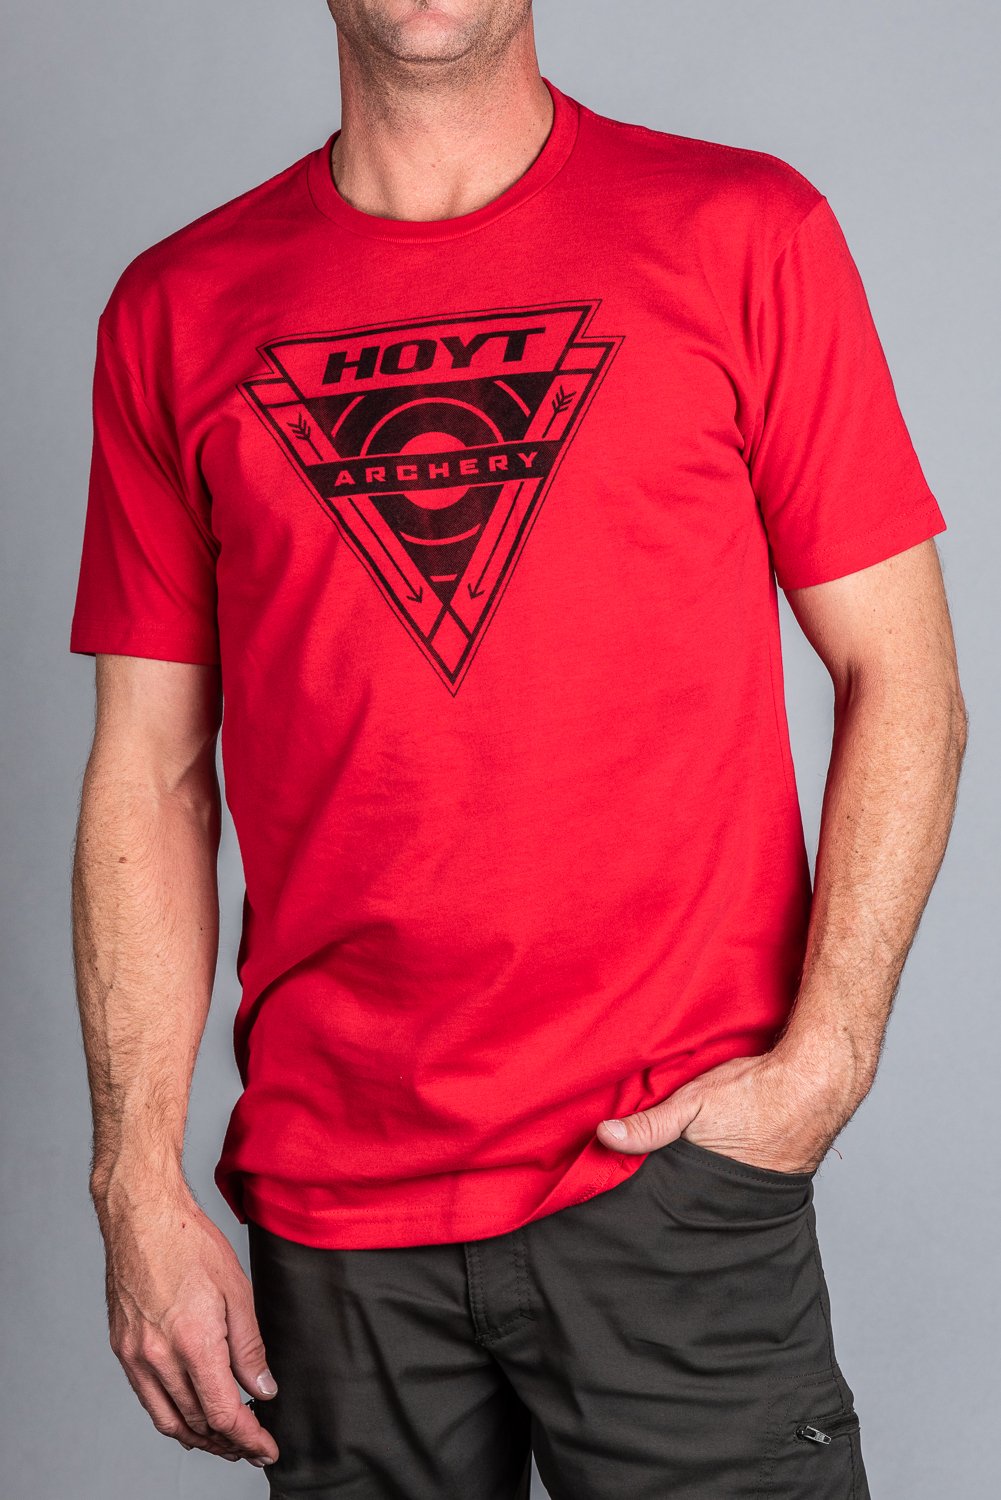 Hoyt On Target T-Shirt X Large - Midwest Archery